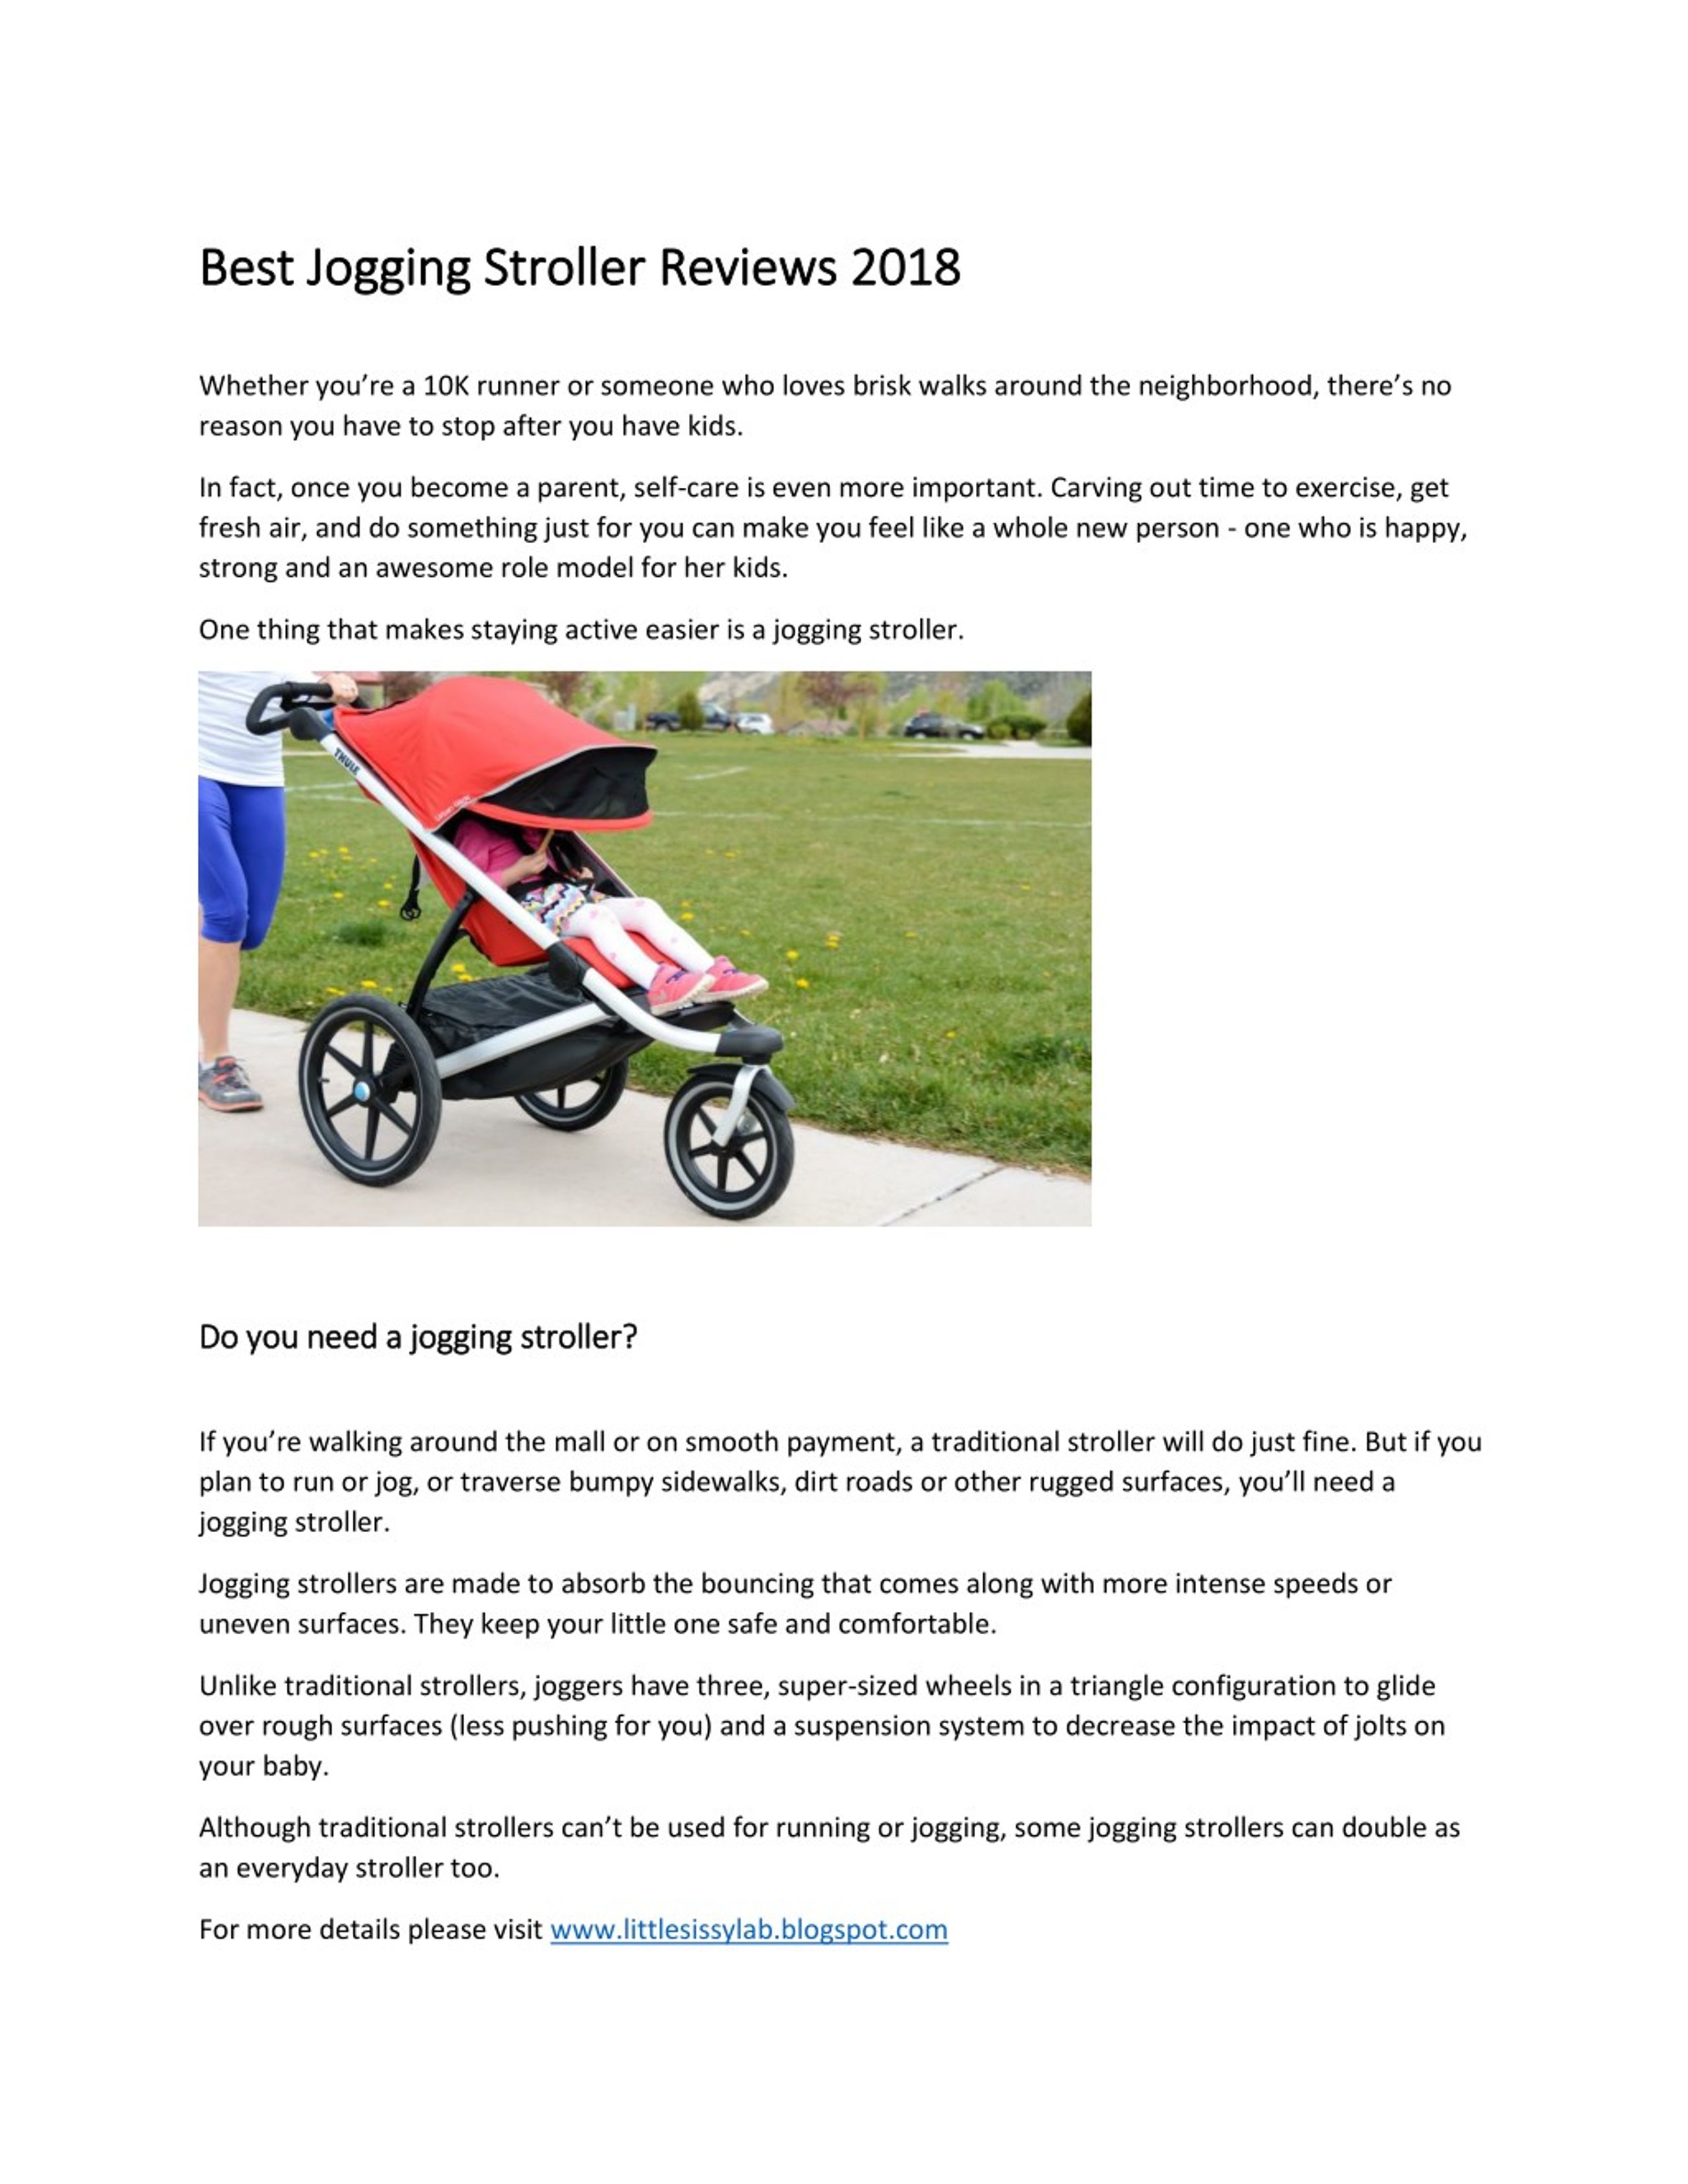 running stroller reviews